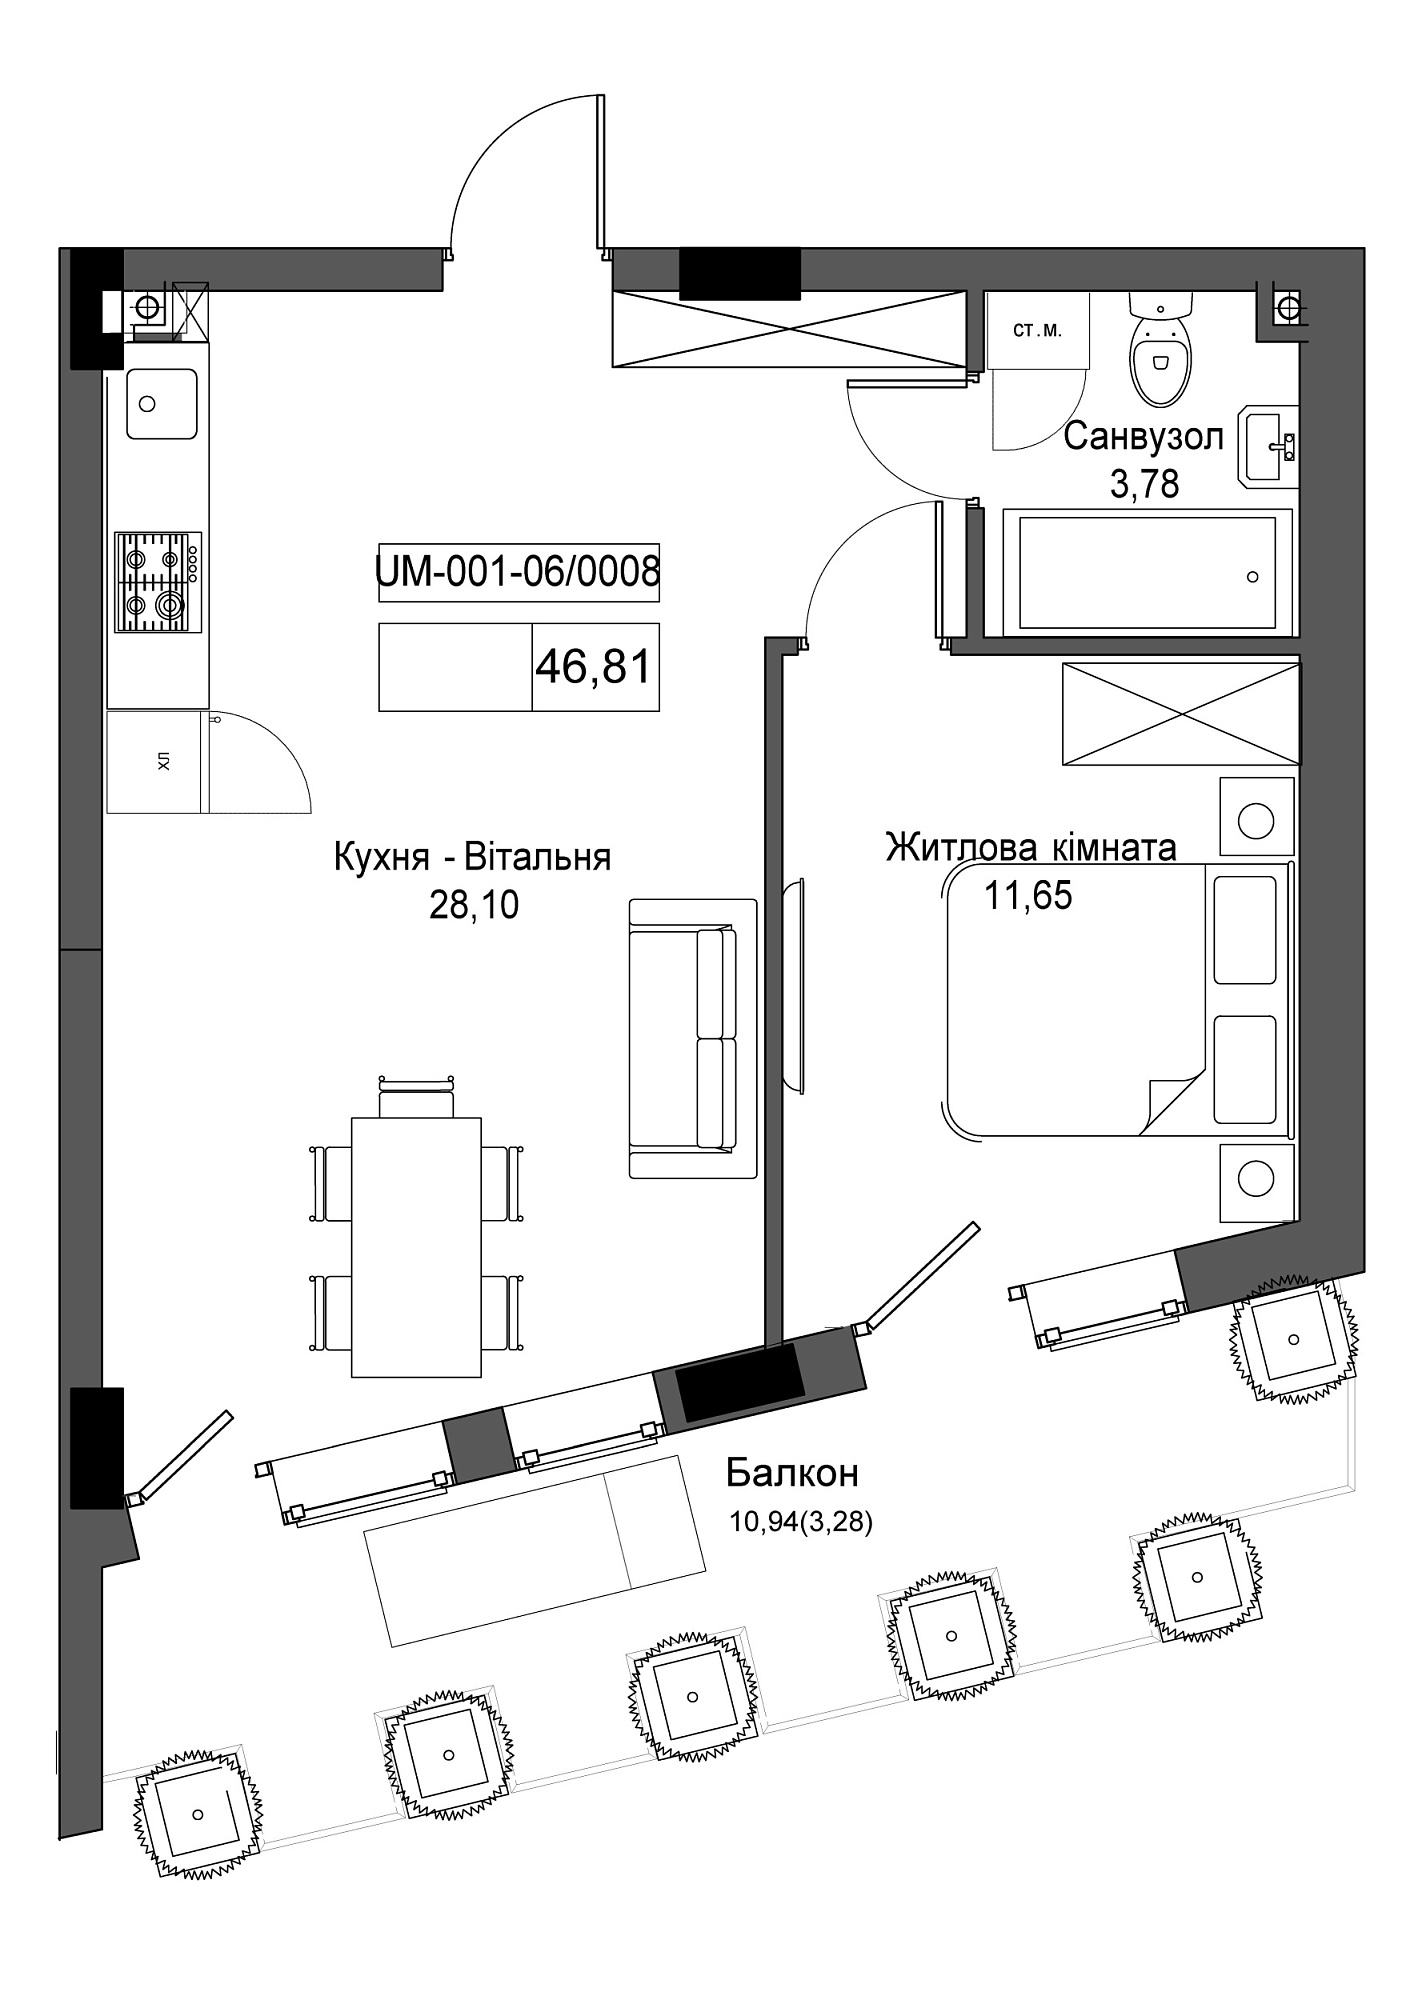 Планування 1-к квартира площею 46.81м2, UM-001-06/0008.